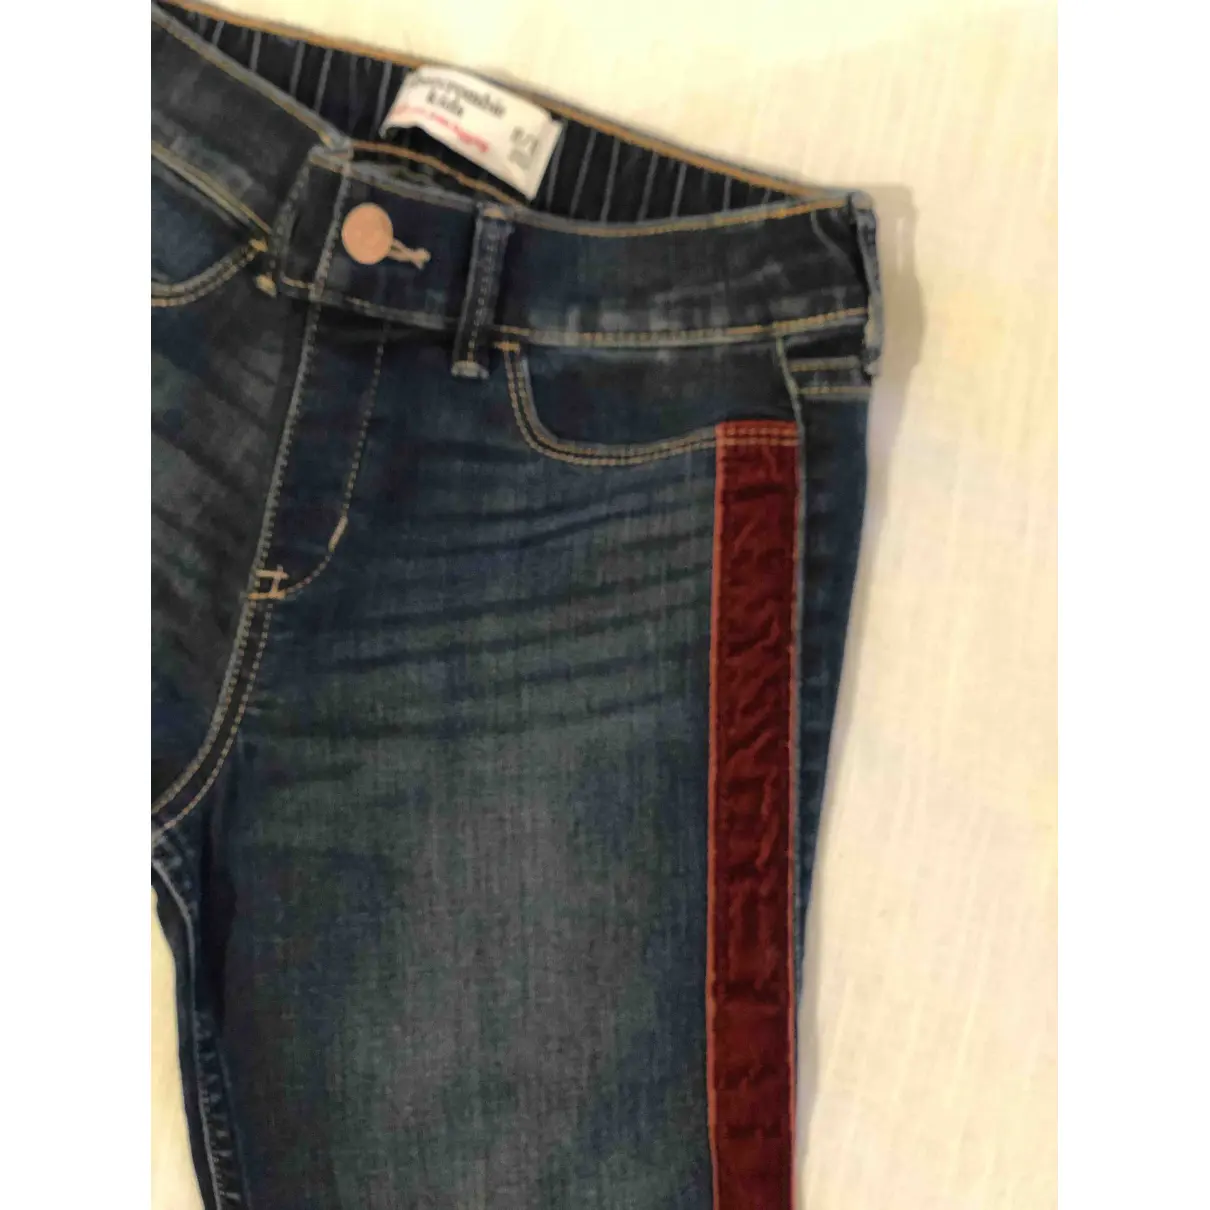 Blue Denim - Jeans Trousers Abercrombie & Fitch